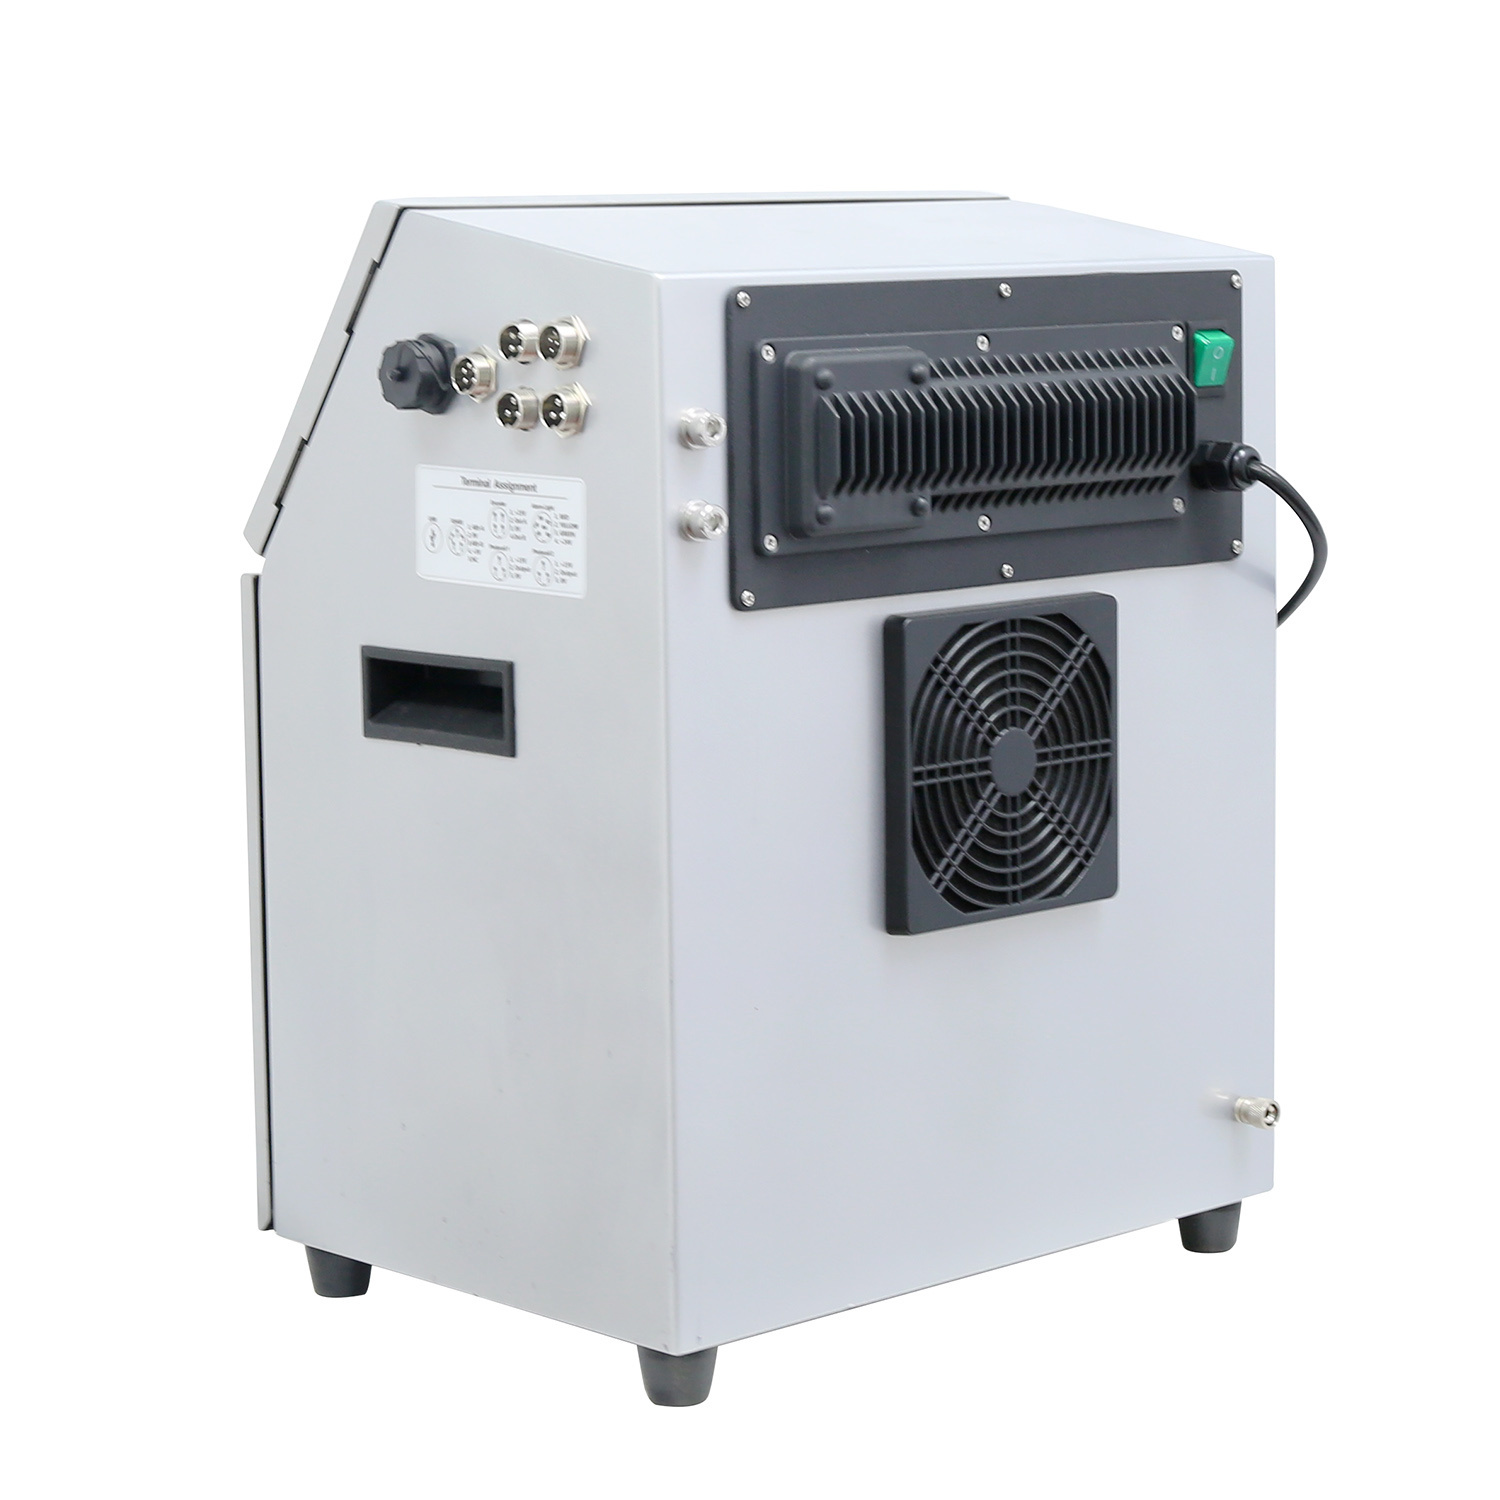 Leadtech Lt800 Thermal Inkjet Printer for Coding